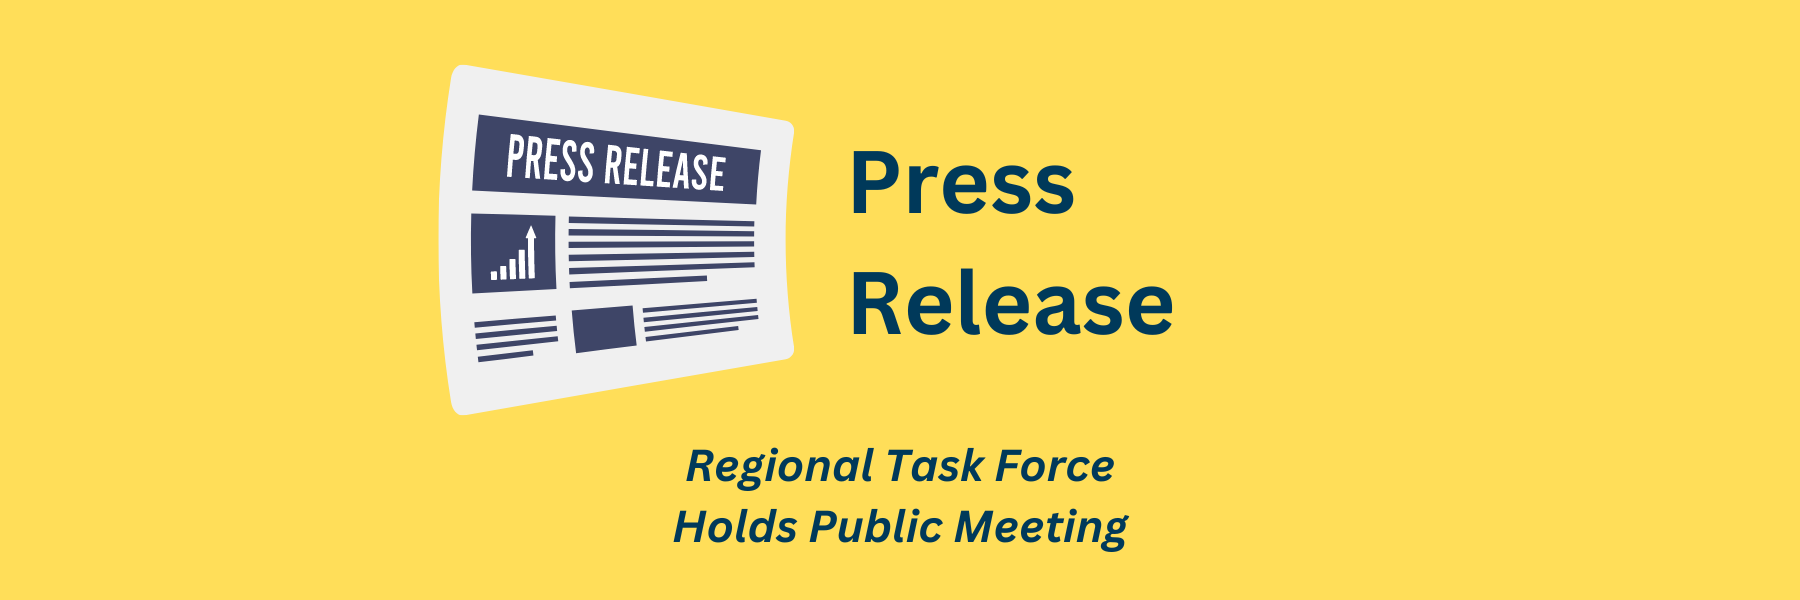 Regional Task Force Holds Public Meeting